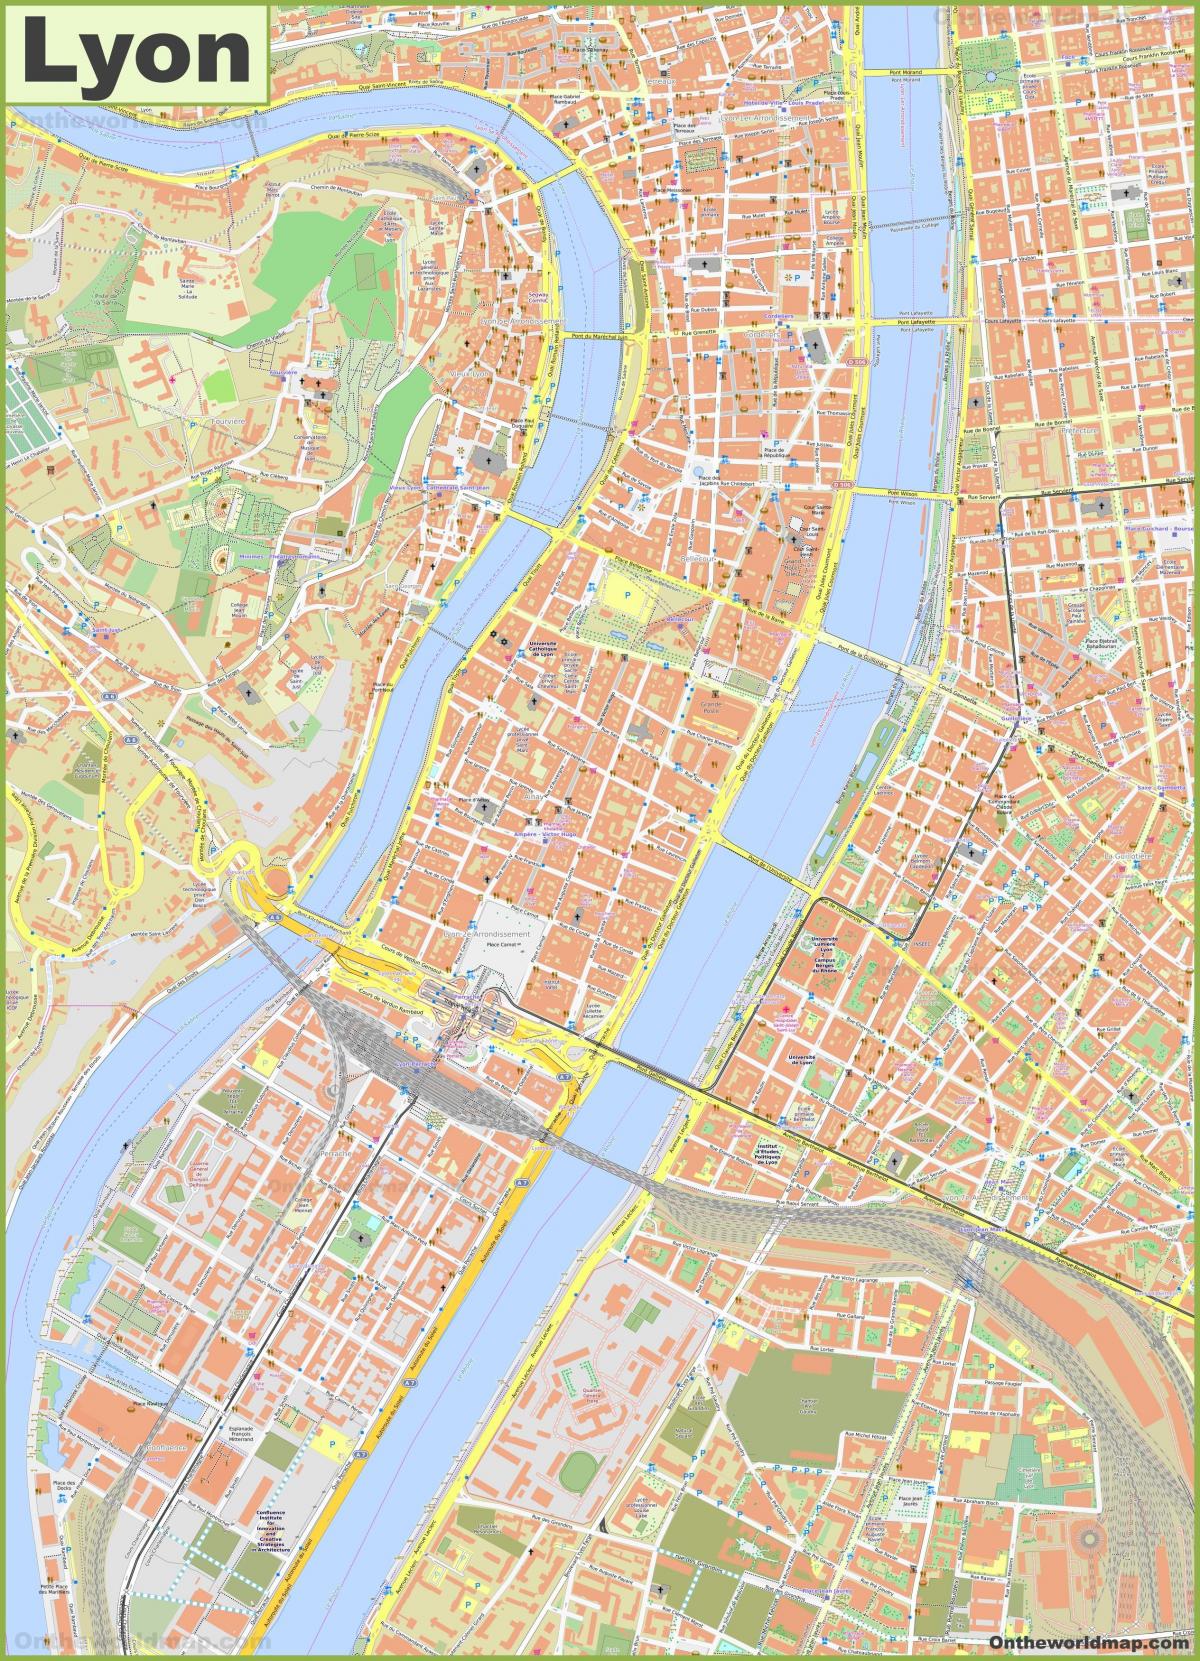 Plan des rues de Lyon